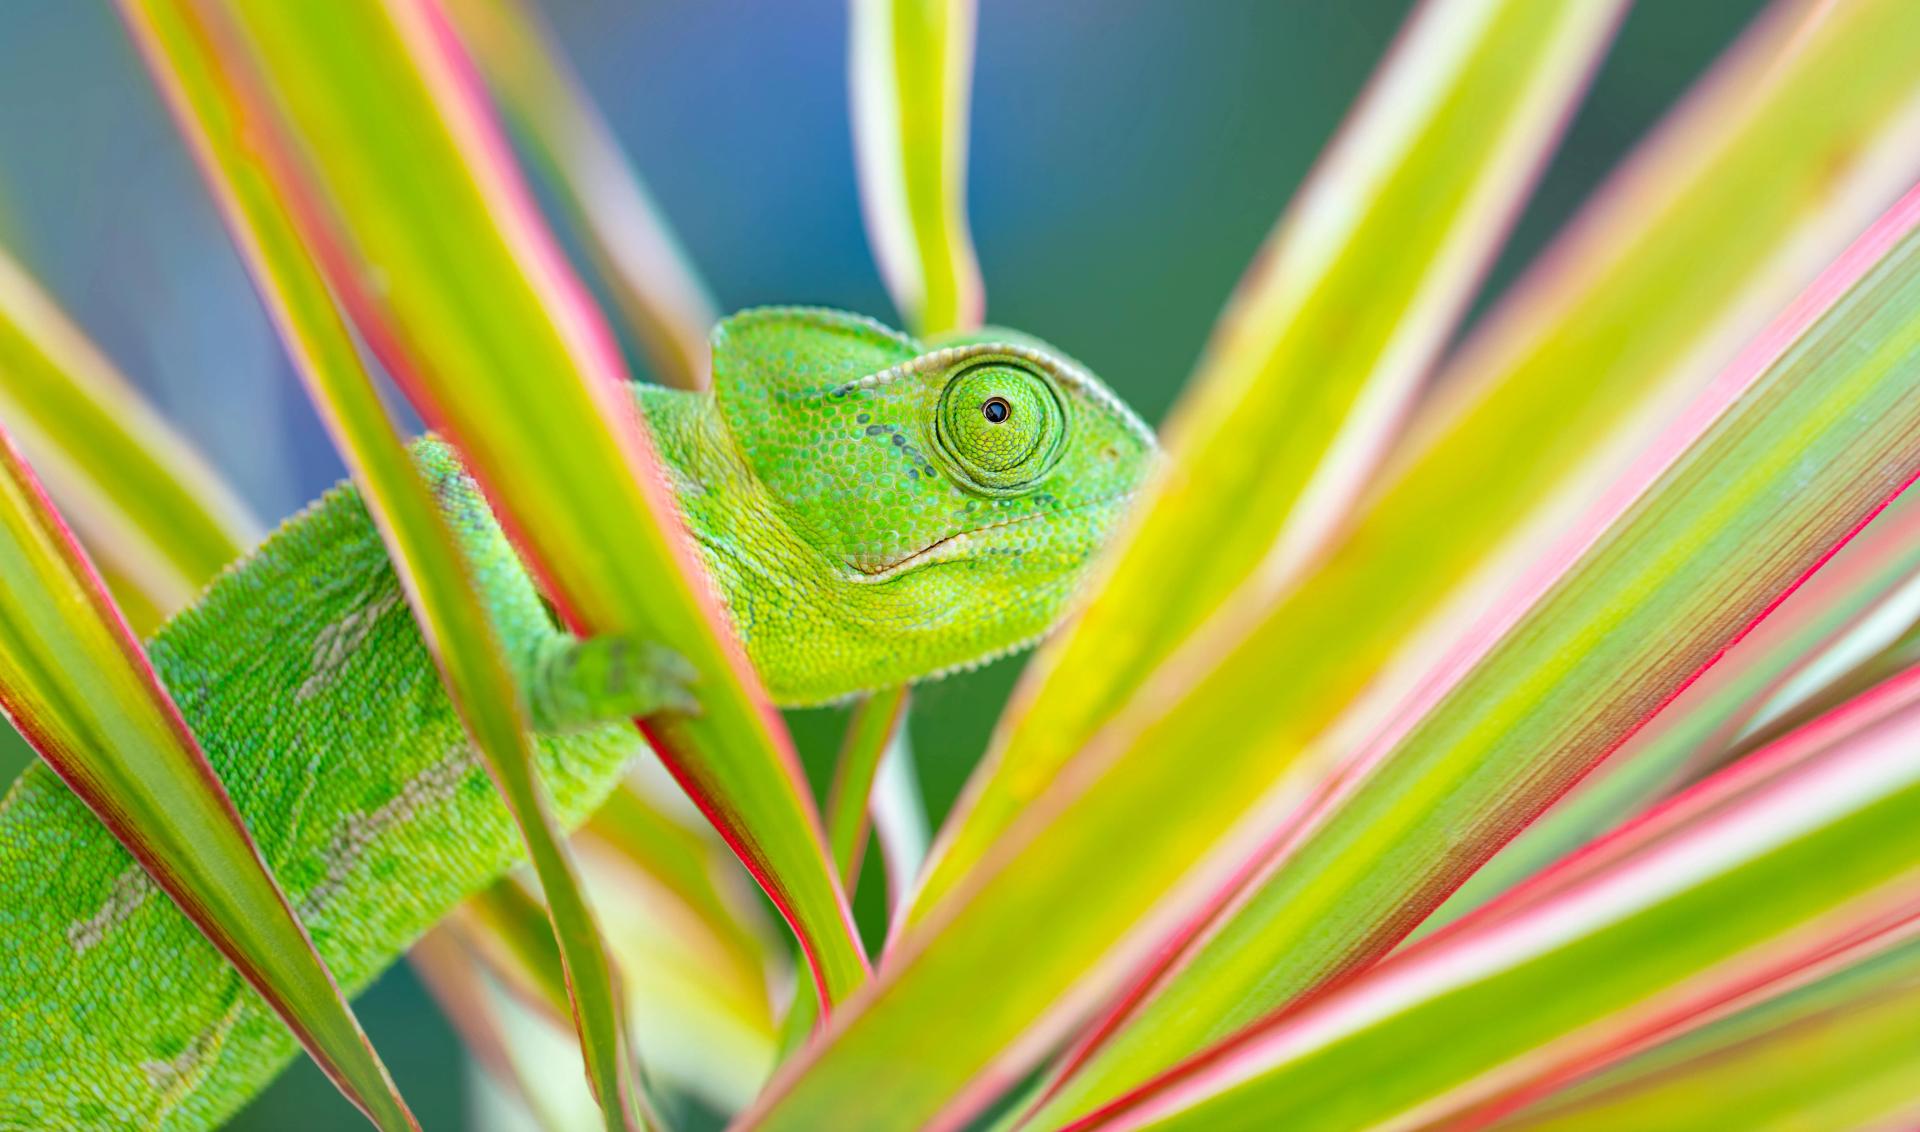 Chameleon sitting on Dracaena